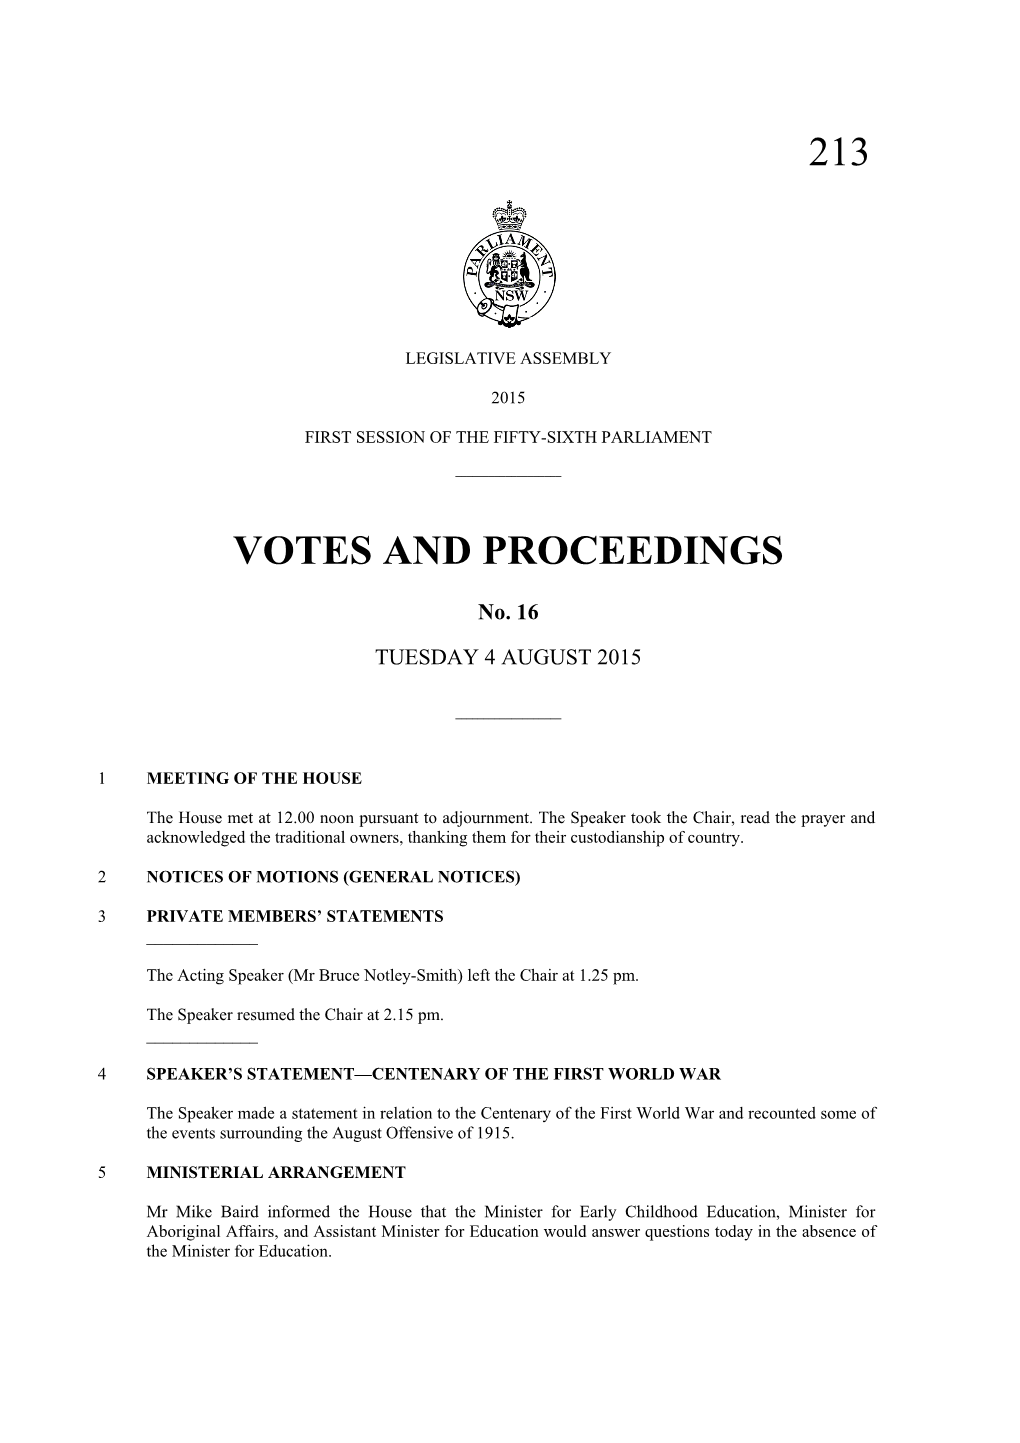 213 Votes and Proceedings